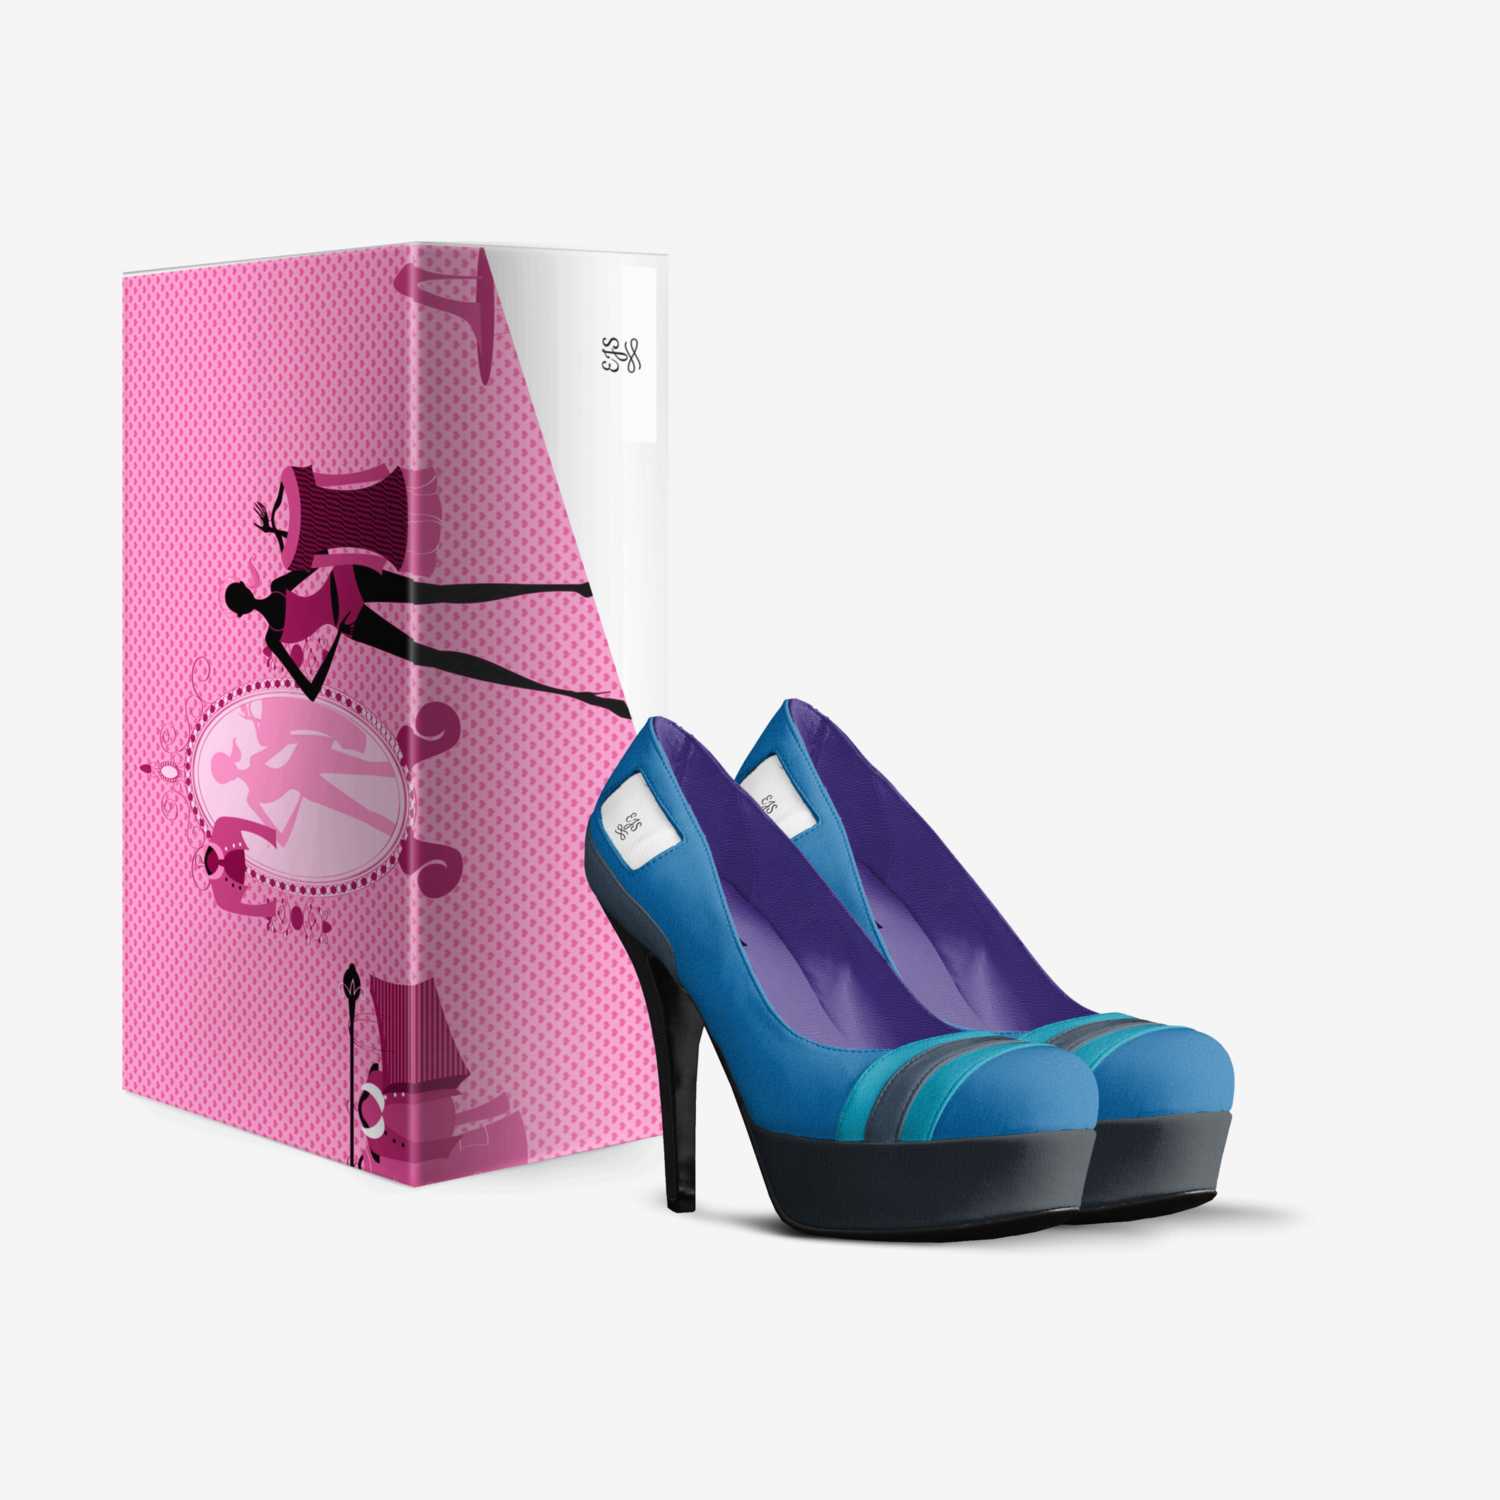 Eliza J custom made in Italy shoes by Elizabethjgonzalez | Box view